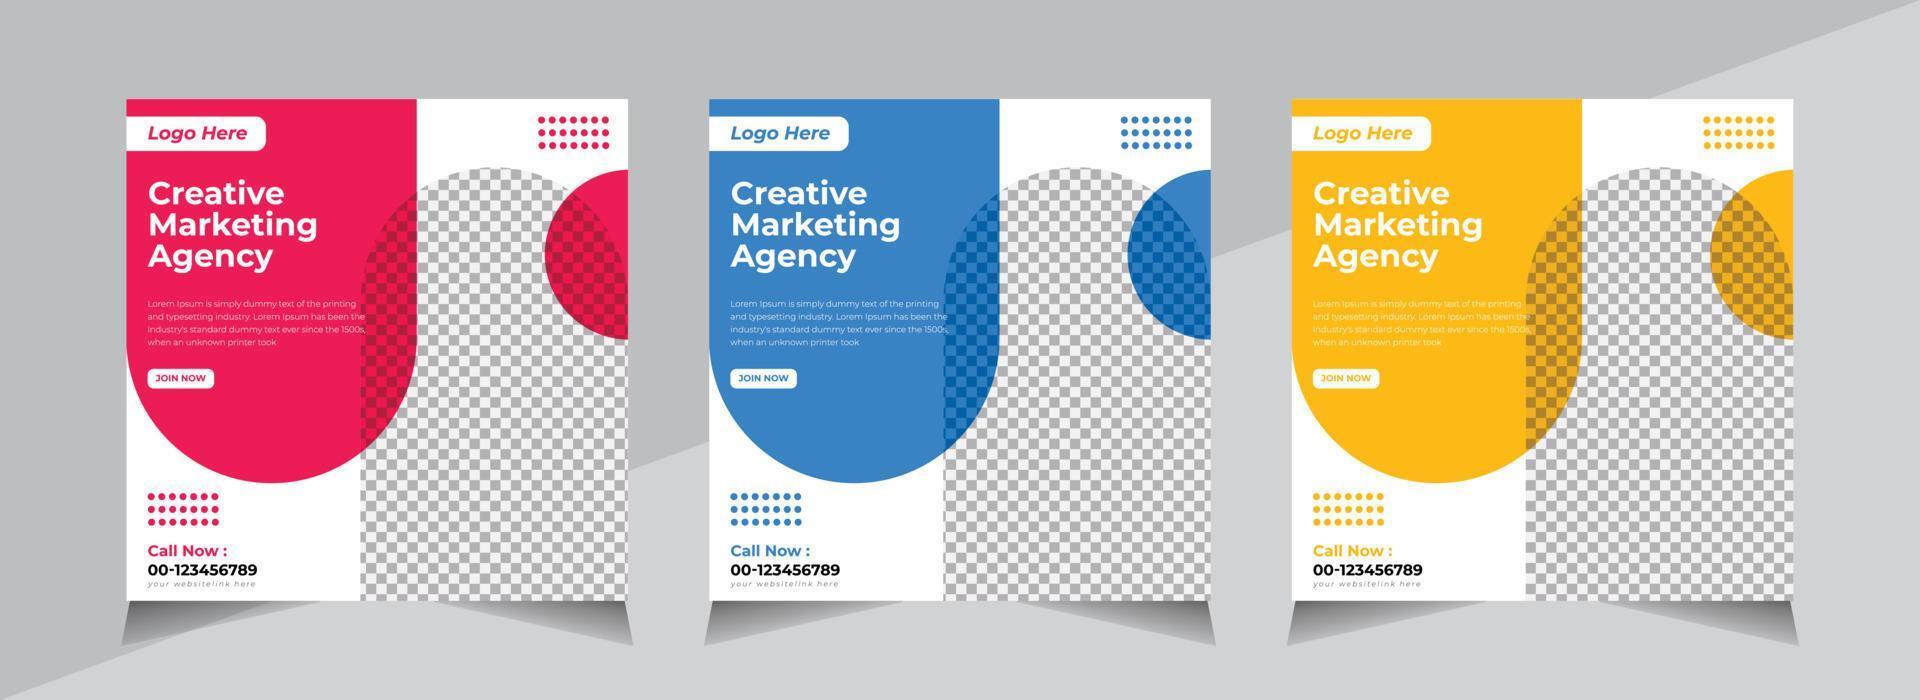 Abstract Creative Social Media banner Design, Business Social Media Post Template, Web Banner, Unique Editable, Free Vector